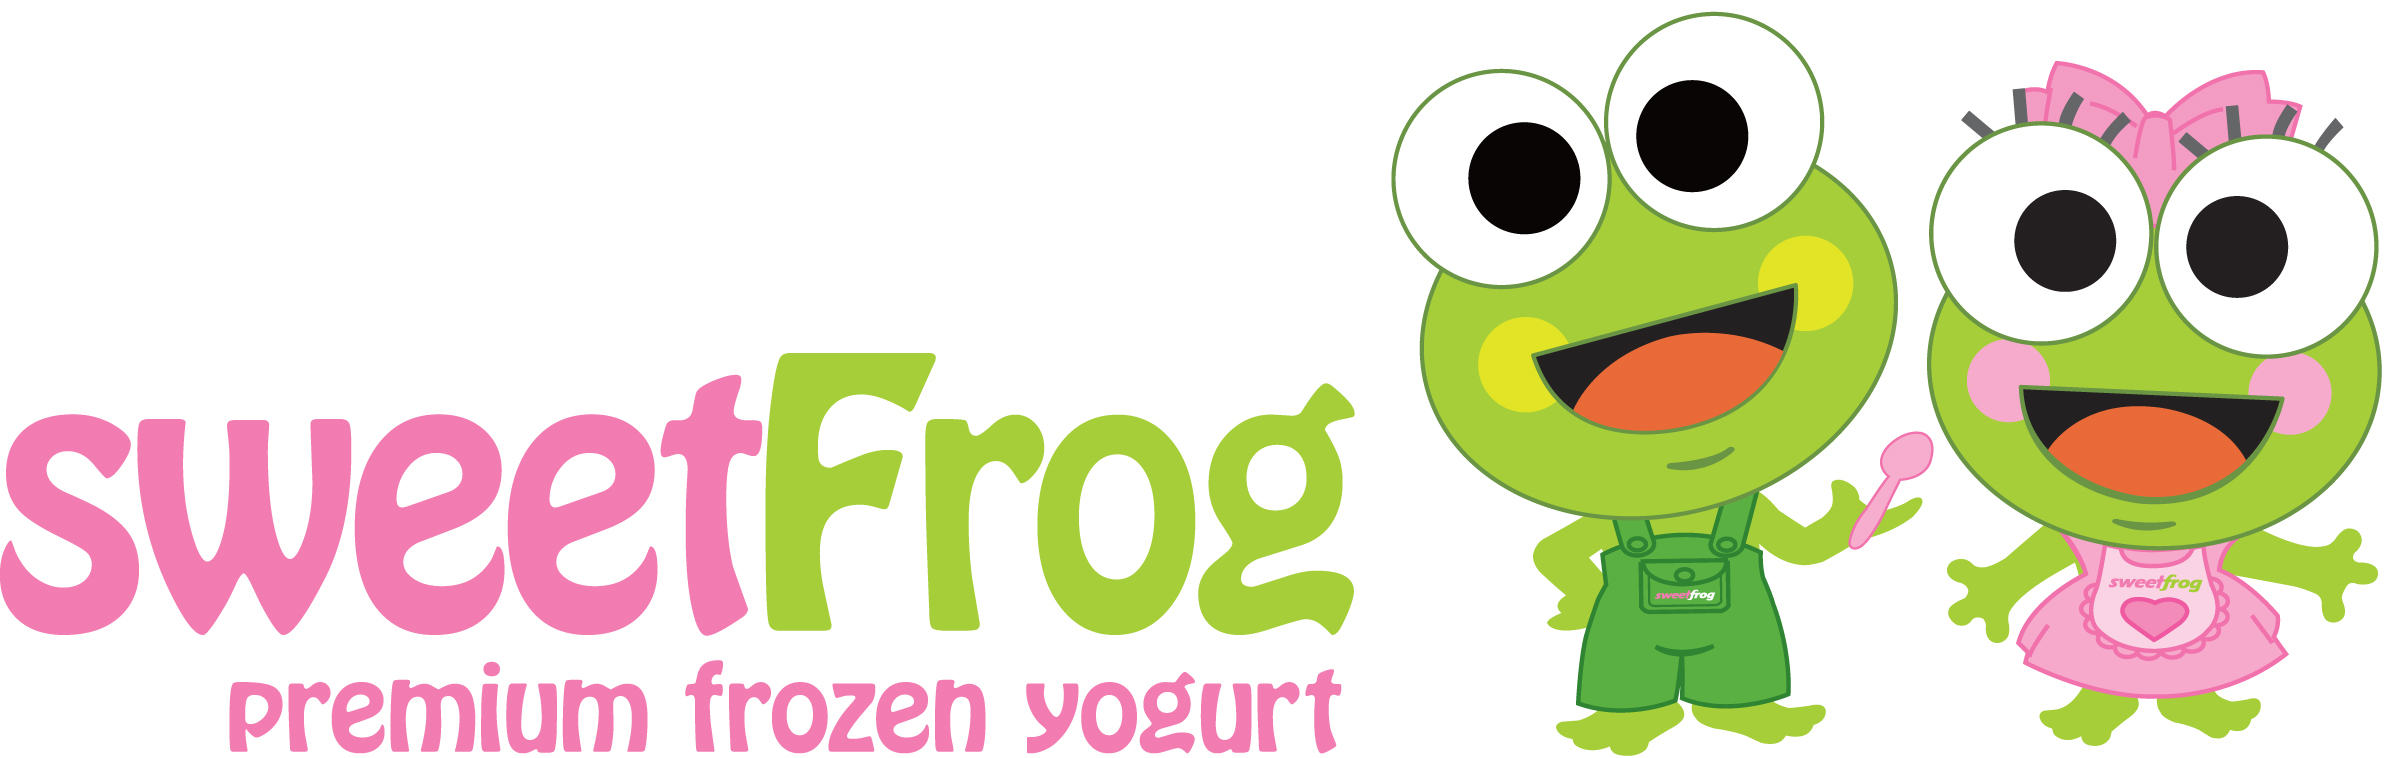 Save 50 at Sweet Frog in Bel Air! Harford Happenings